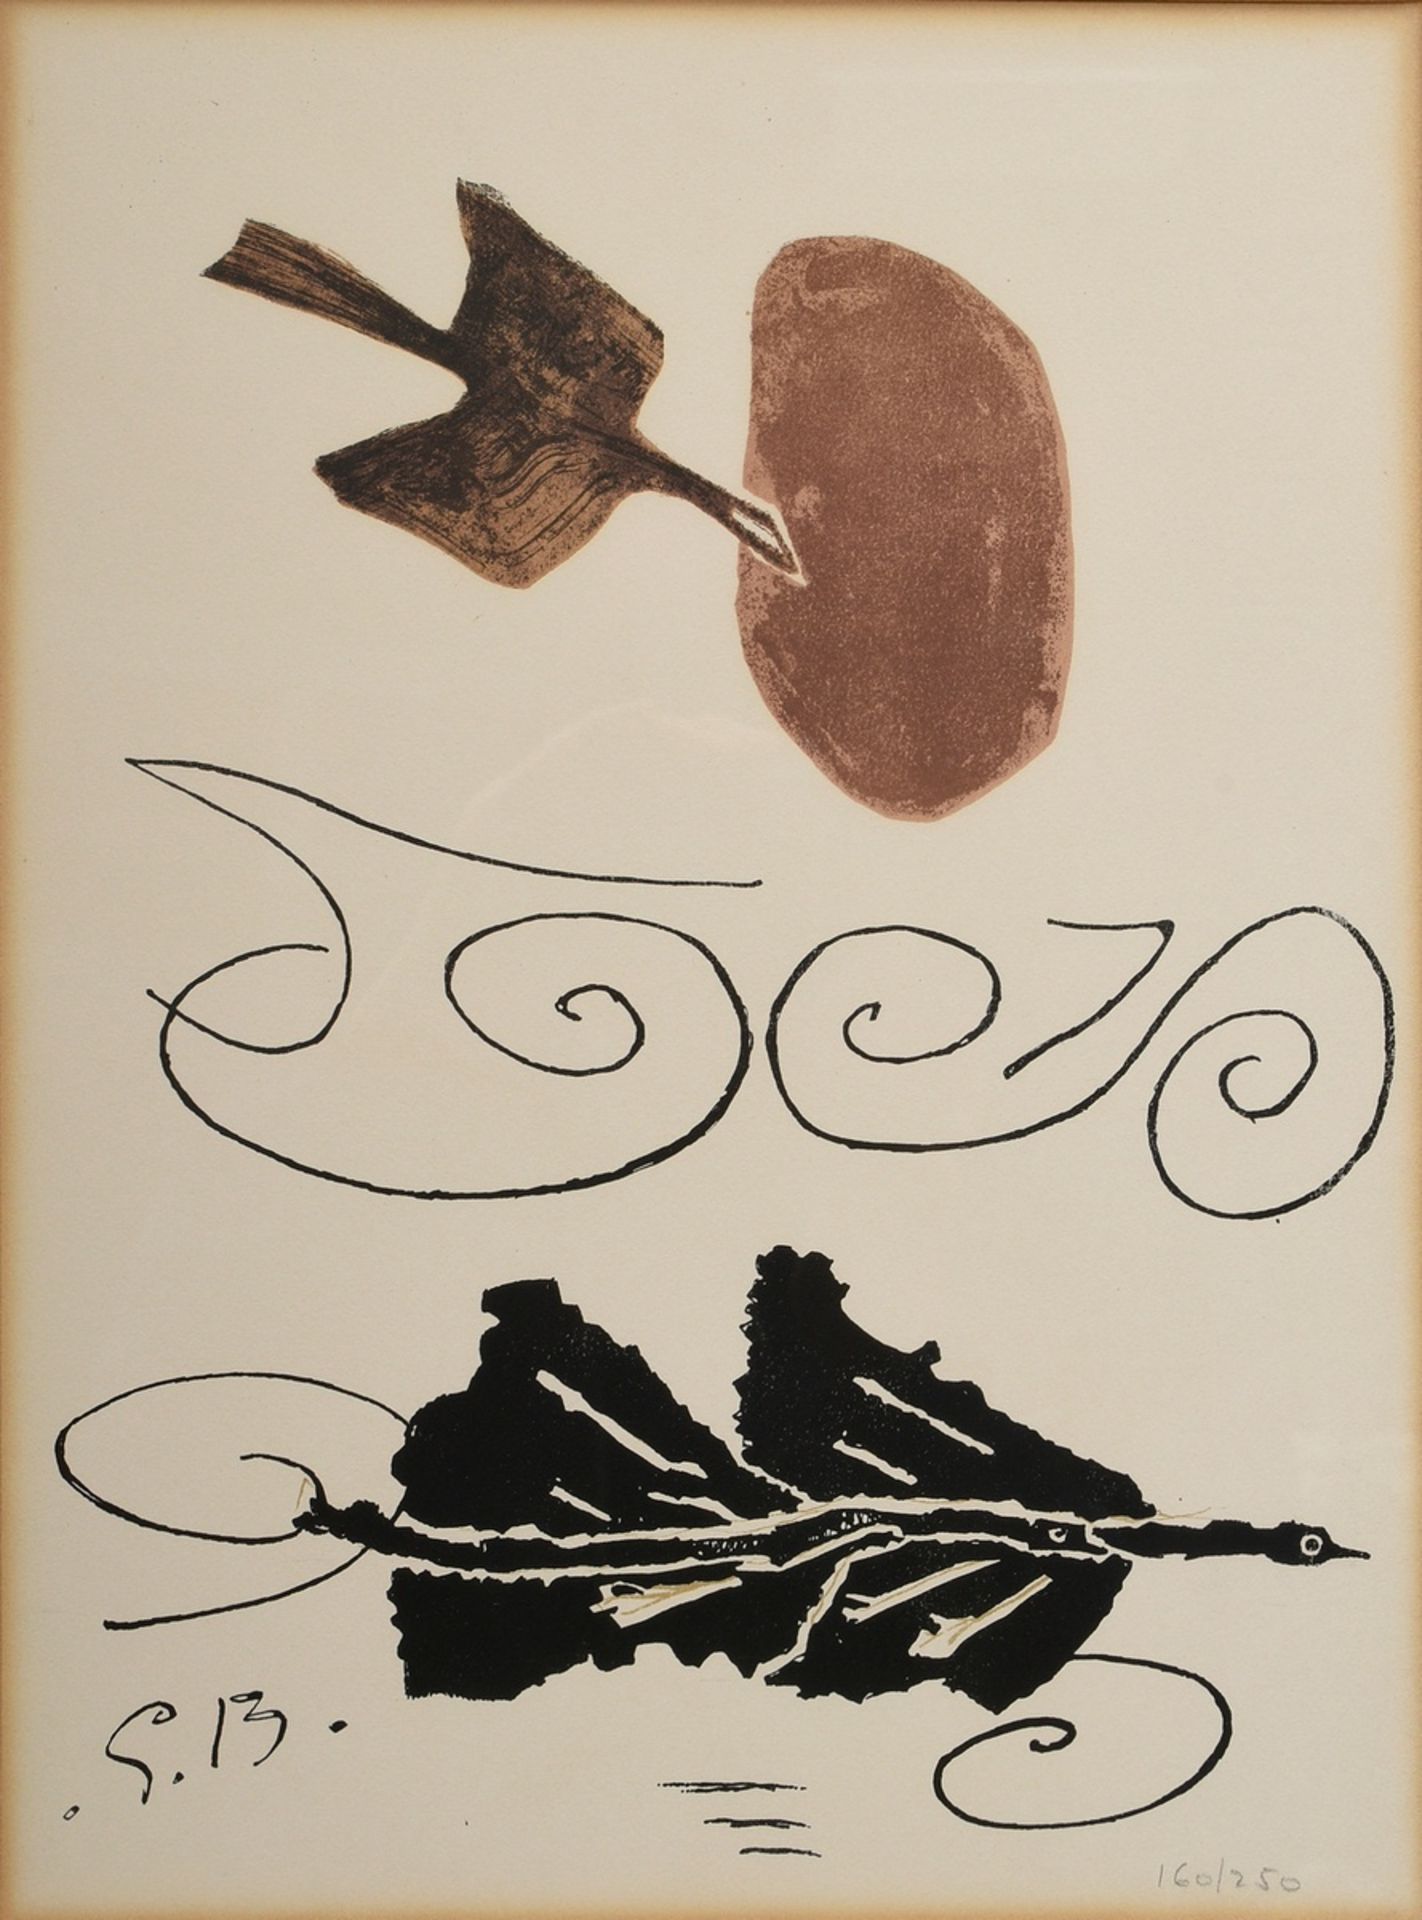 Braque, Georges (1882-1963) "Composition IV" 1956, lithograph, 160/250, from: "Derrière le Miroir", - Image 2 of 2